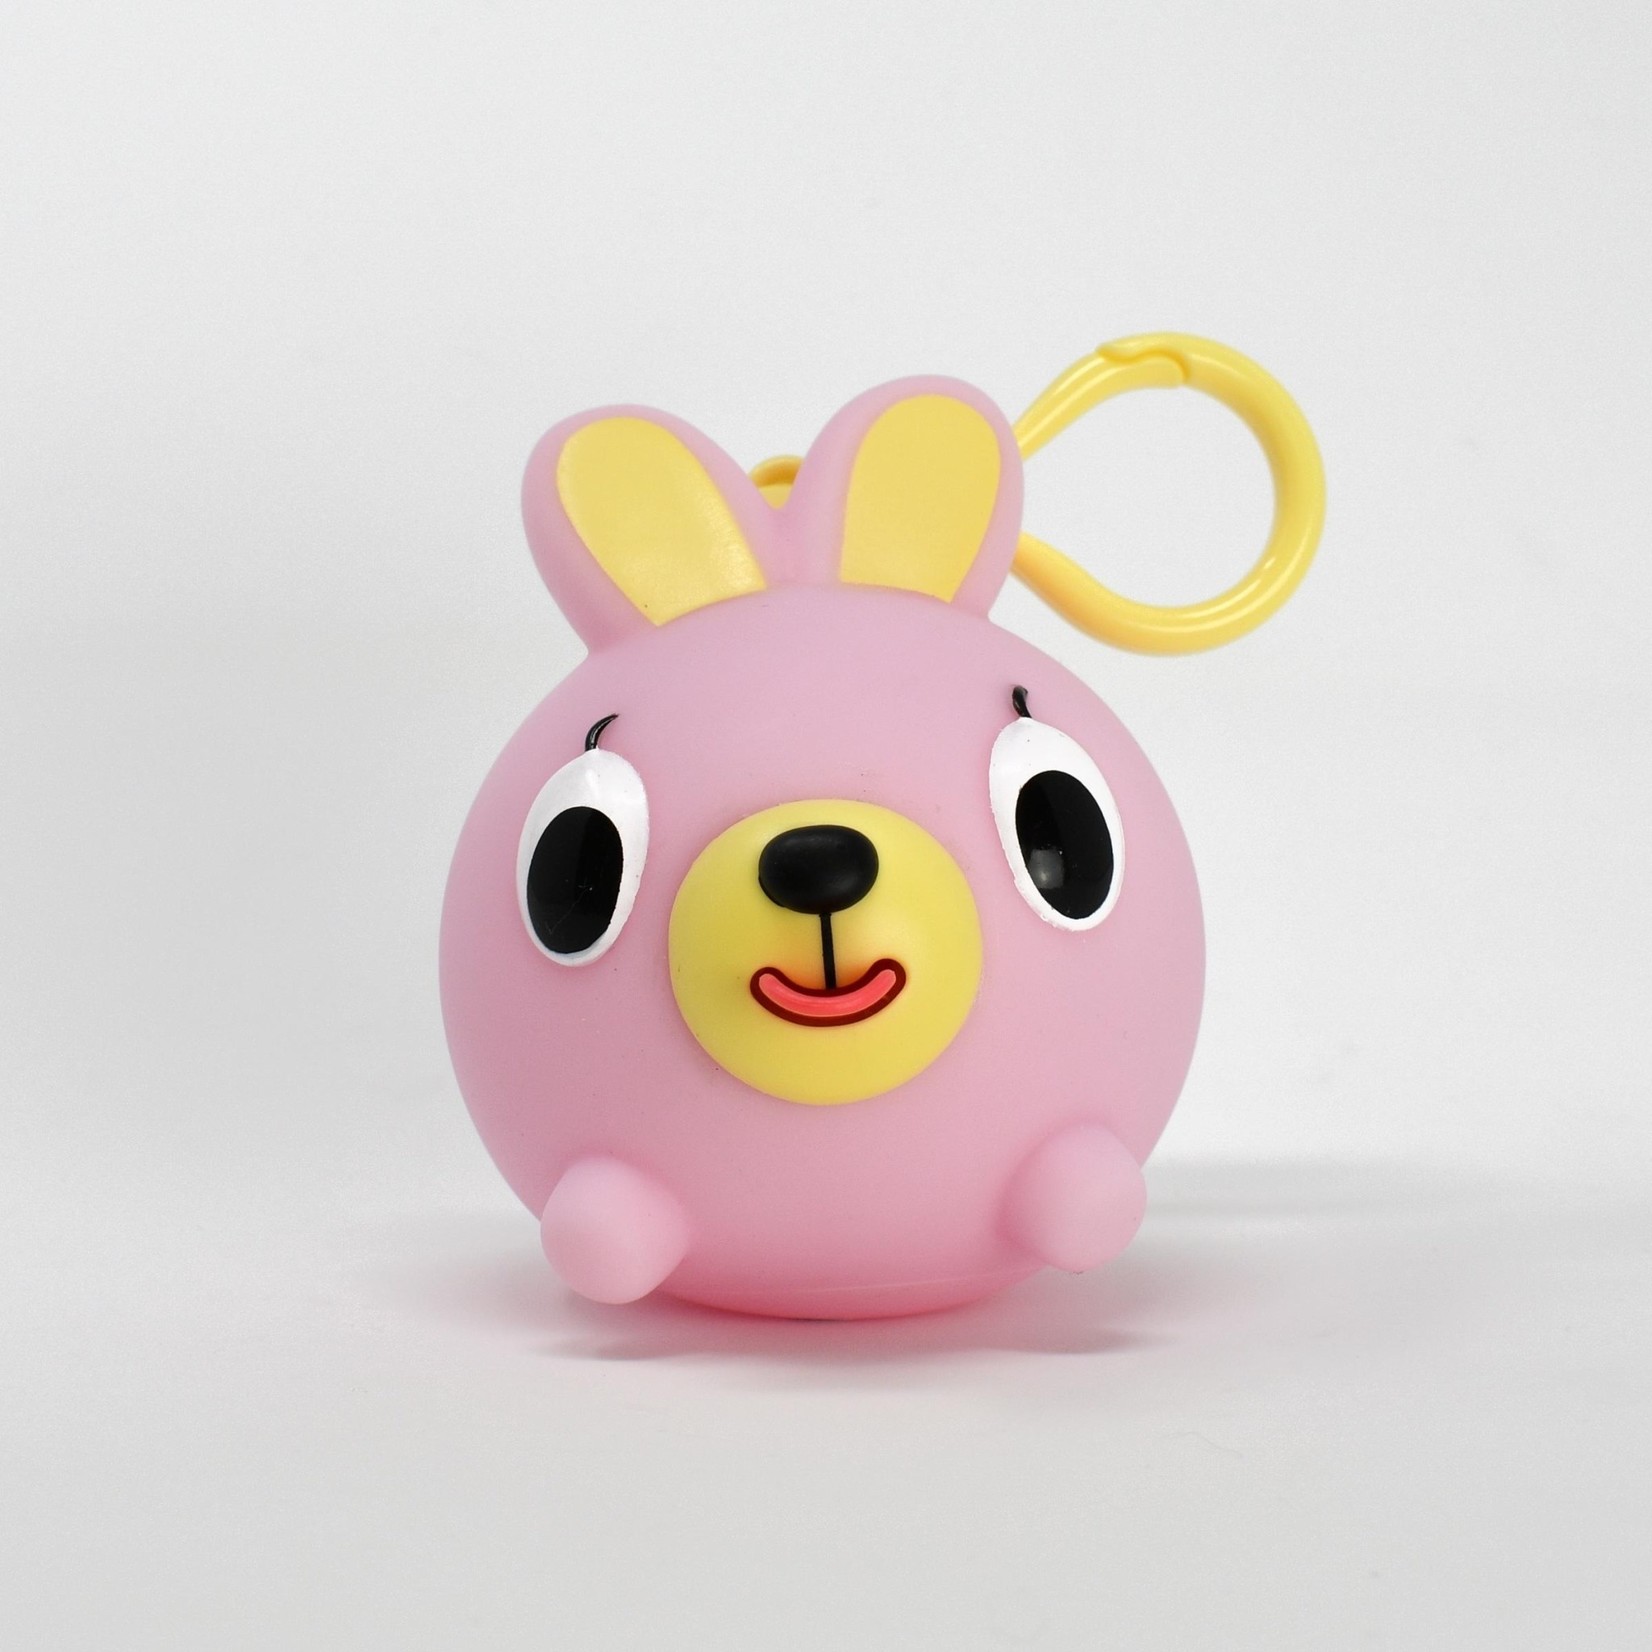 Sankyo Toys/JabberBall Pink Jabber Ball Bunny Jr.